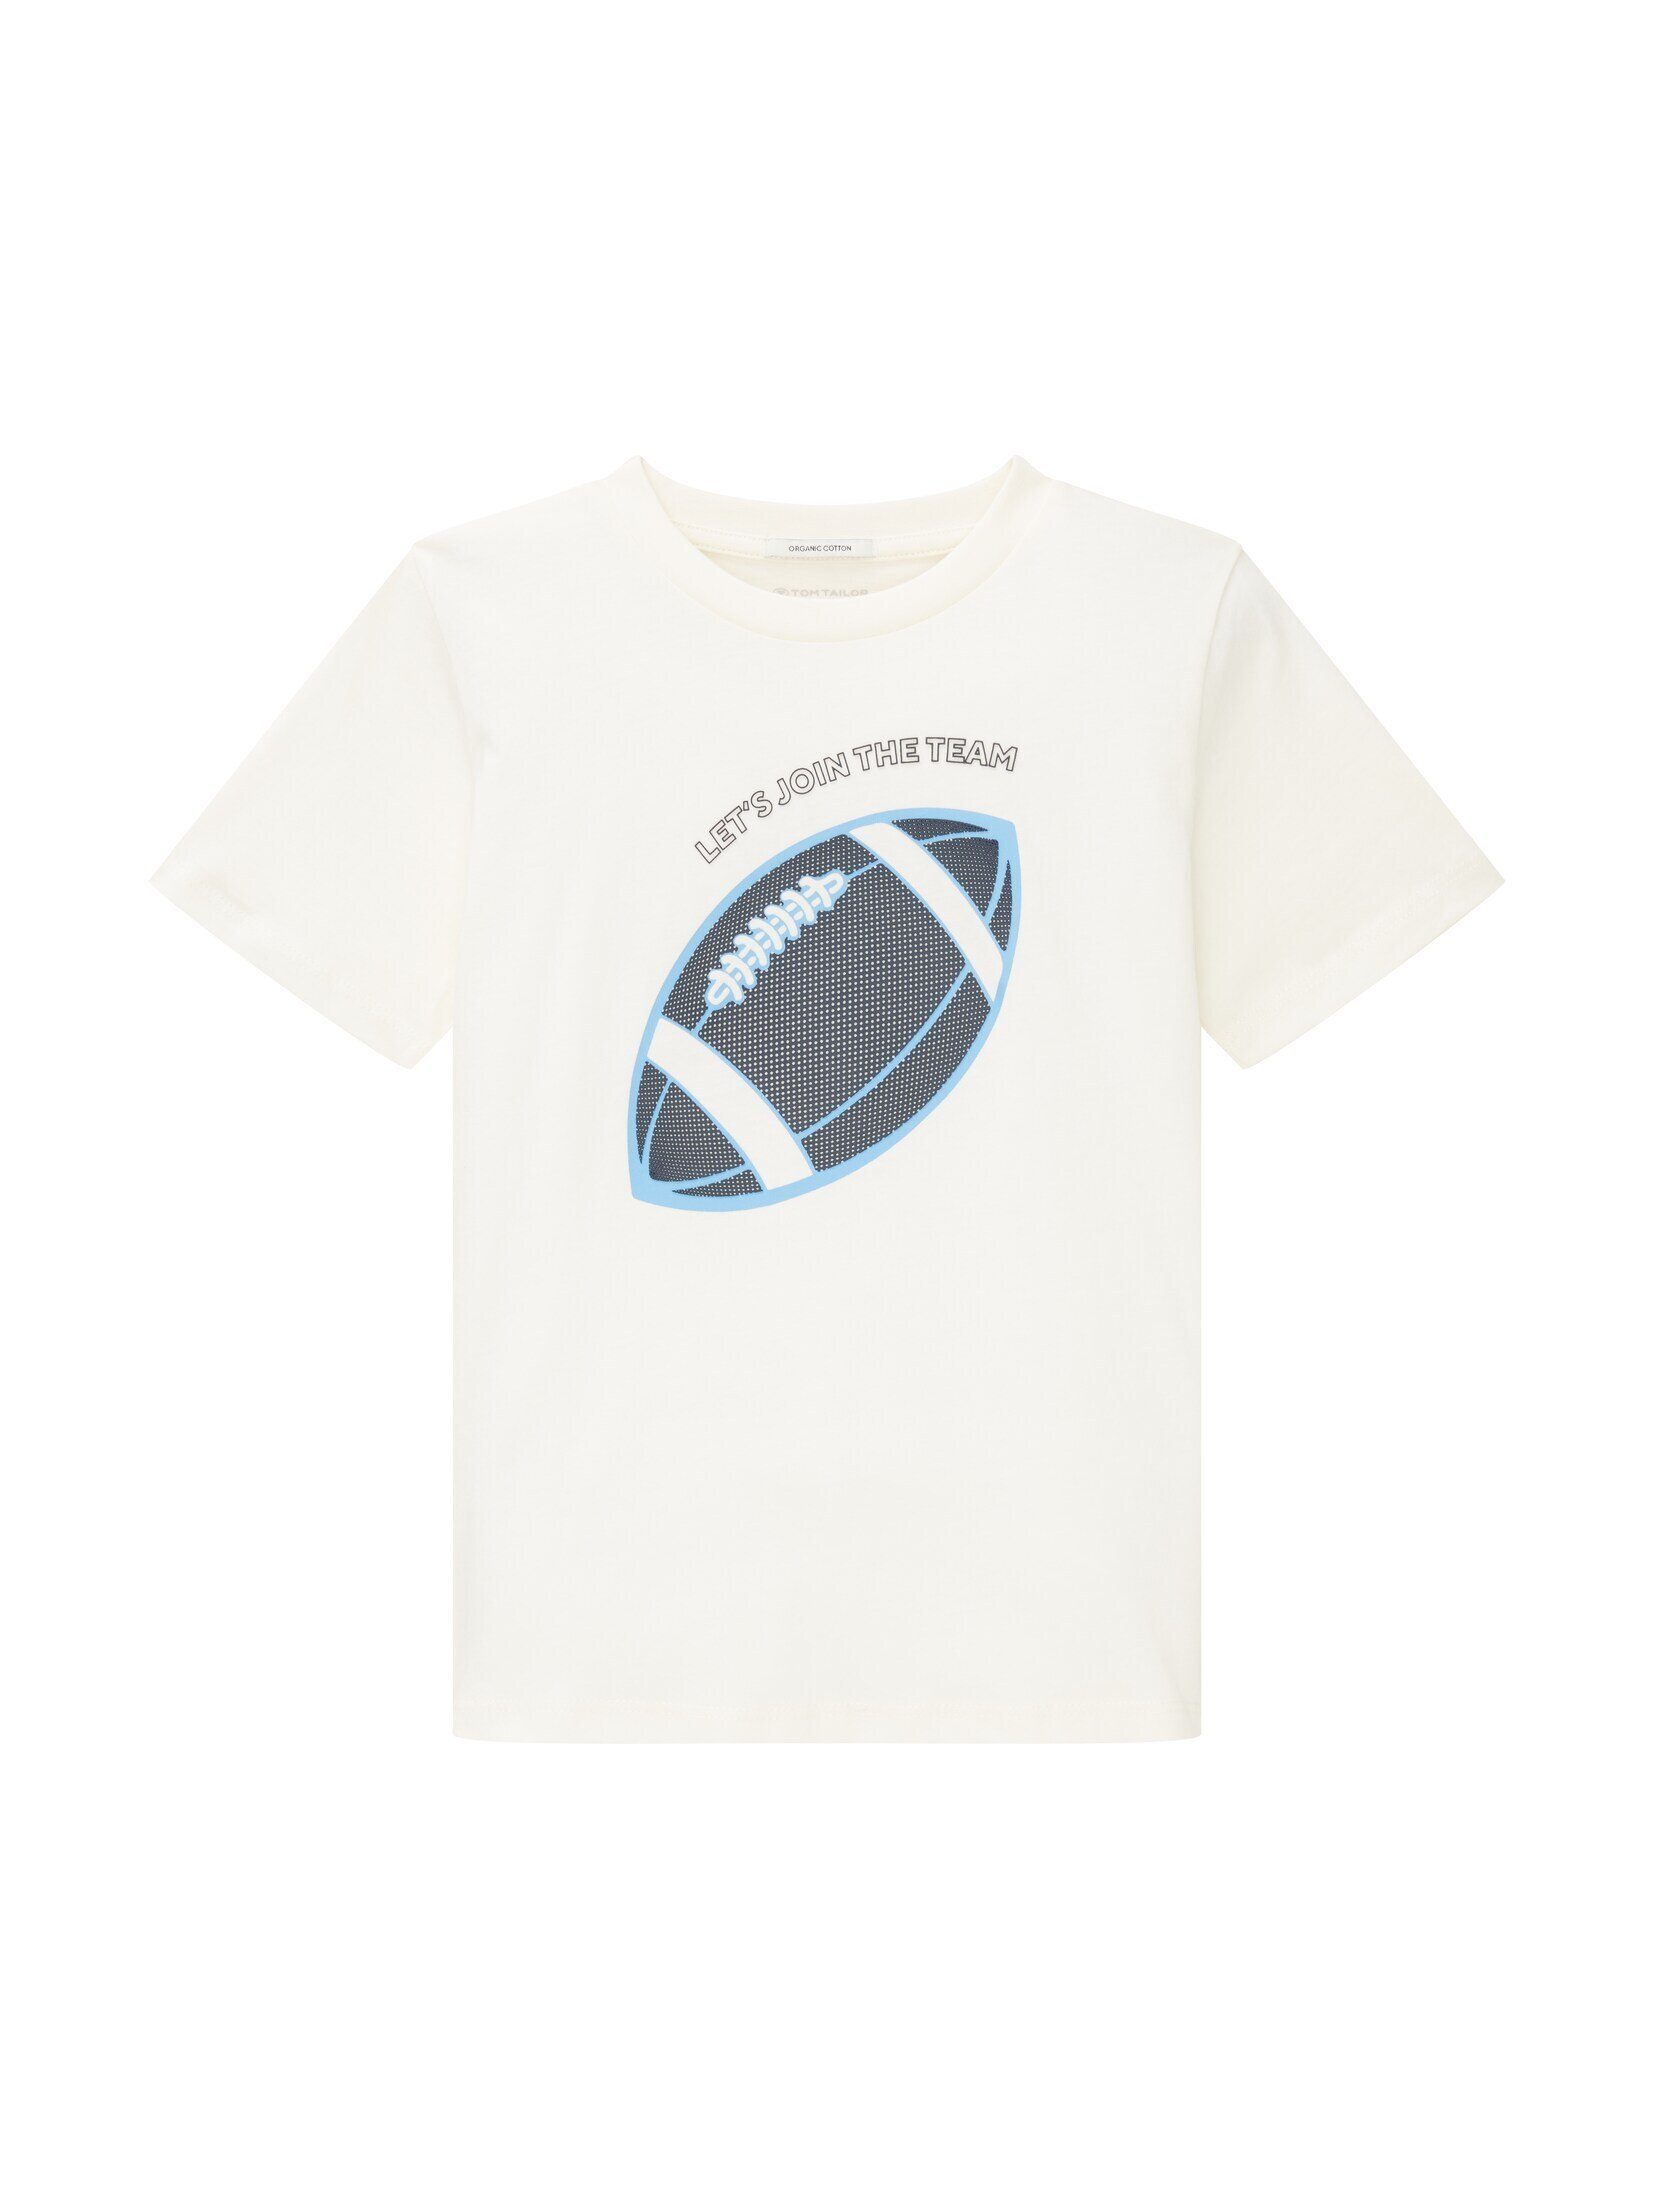 T-Shirt TAILOR TOM White mit Wool T-Shirt Print